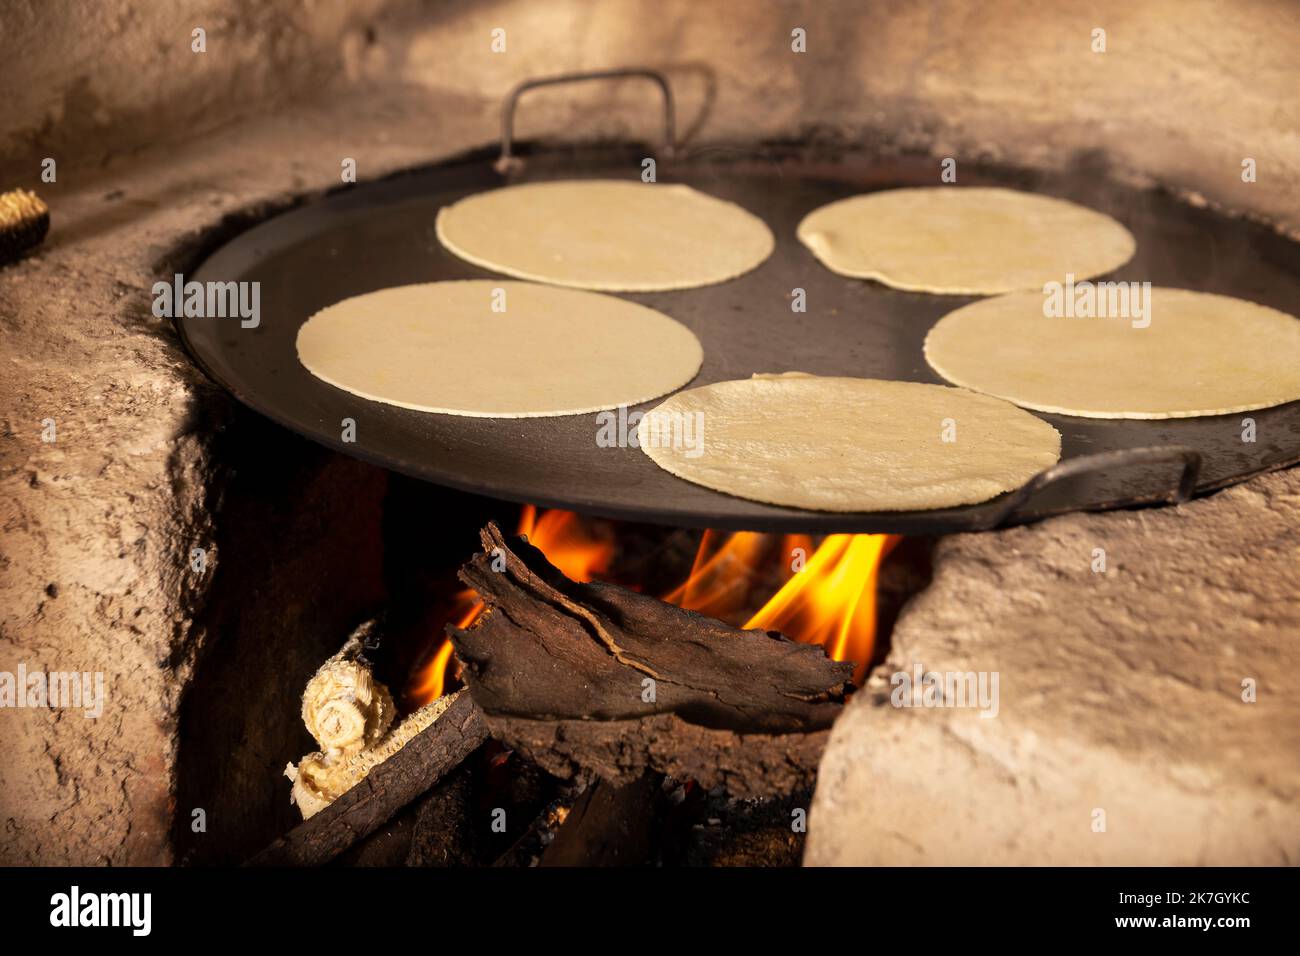 Comal tortillas fotografías e imágenes de alta resolución - Alamy